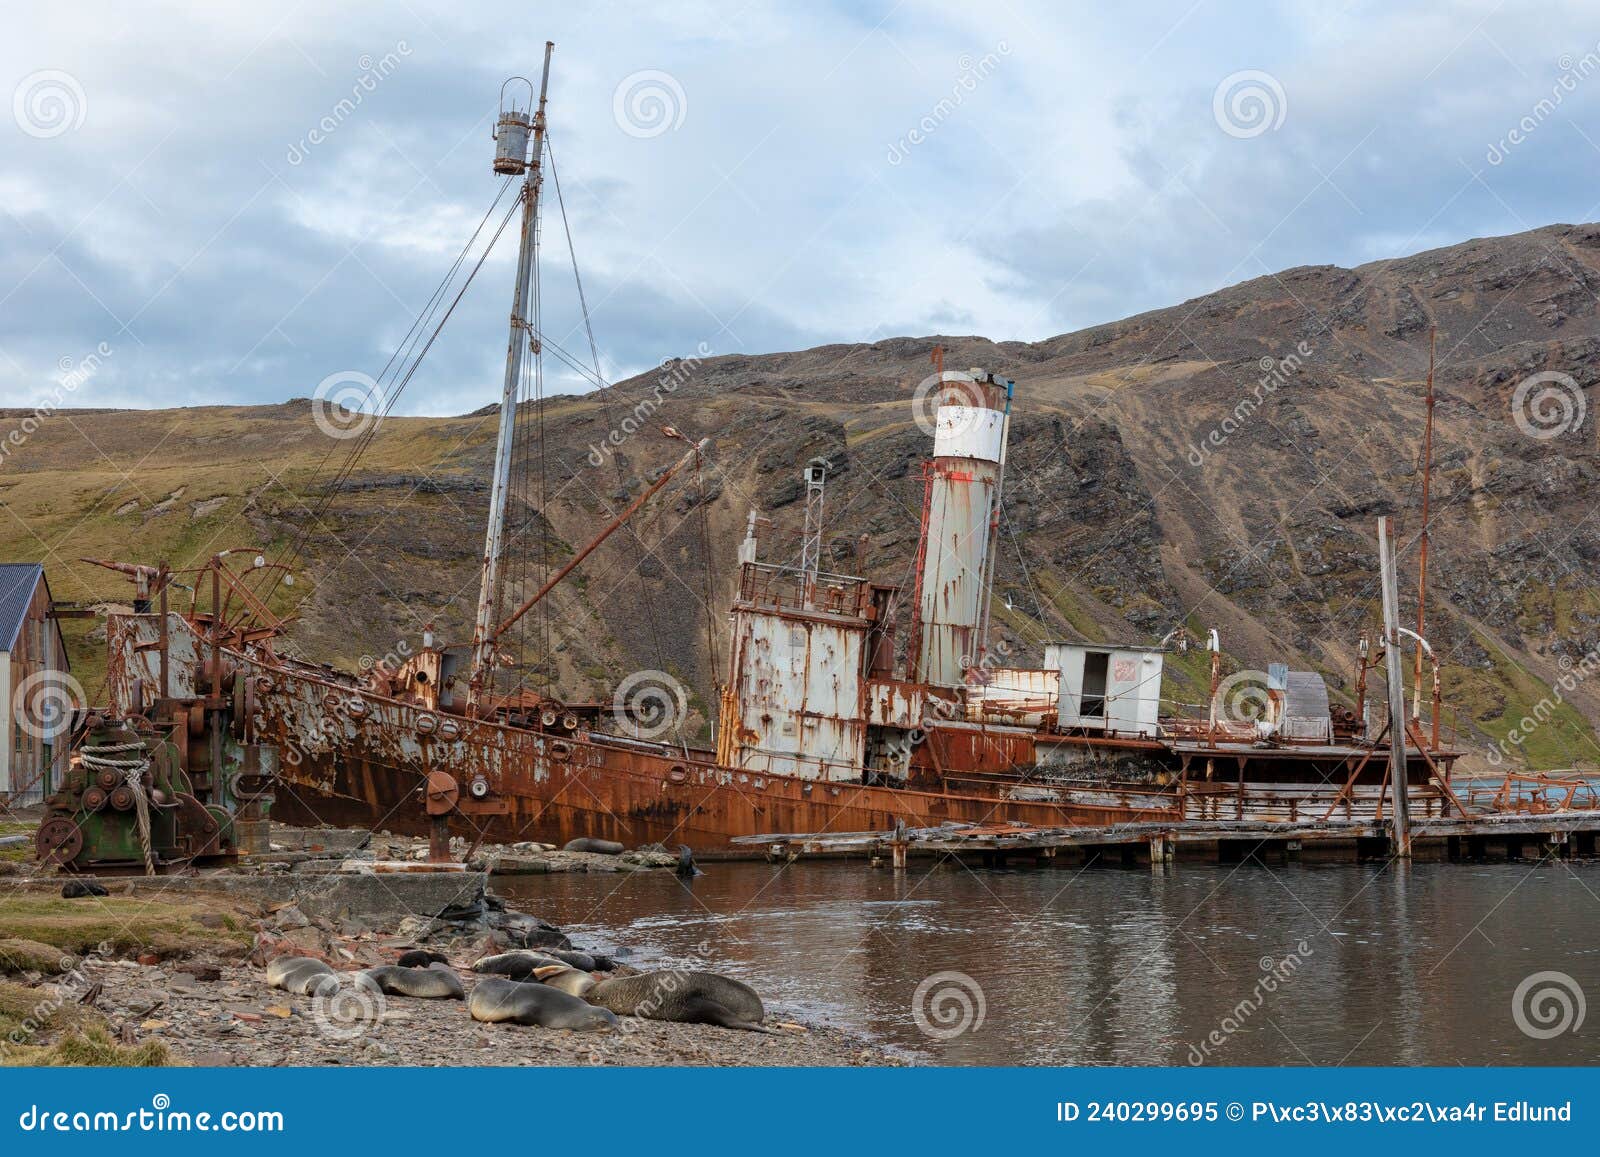 roasty whaler ship stranded in grytviken, south georgia, antarctica.